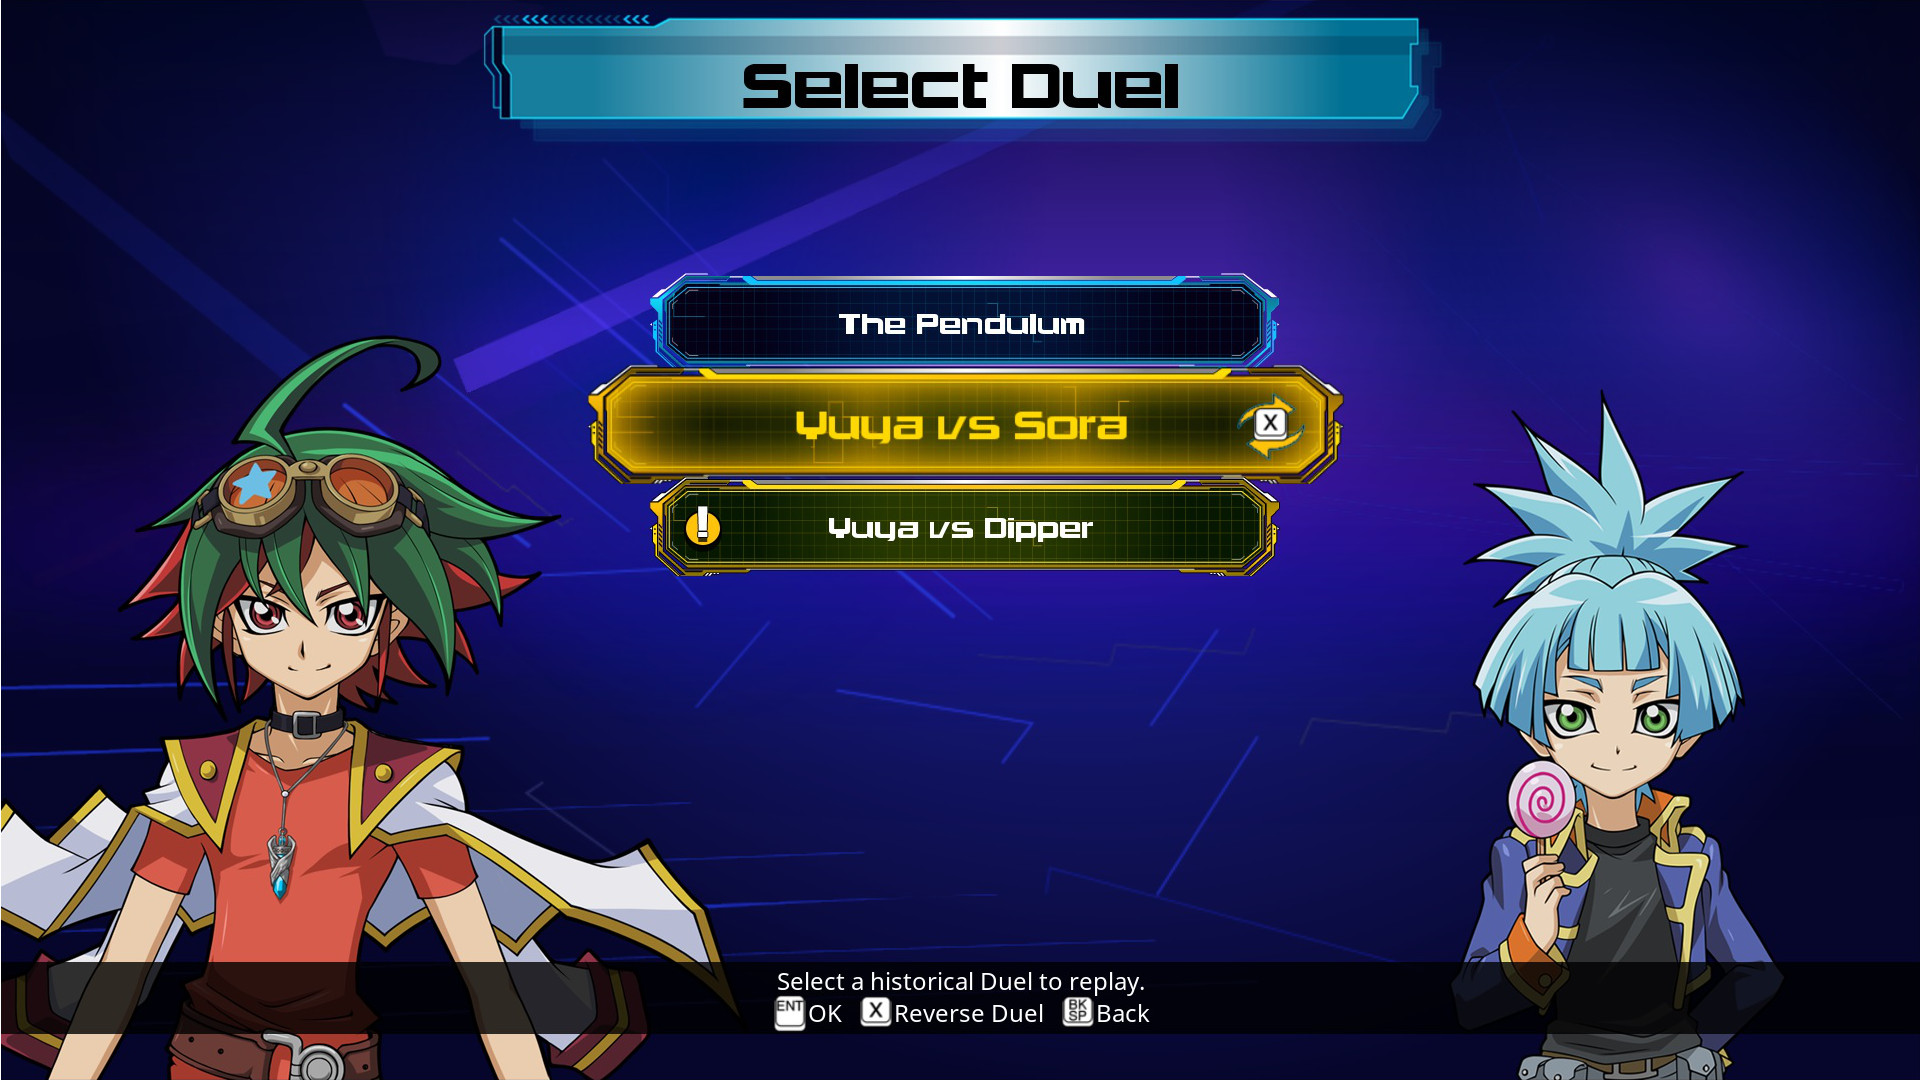 Yu-Gi-Oh! Legacy of the Duelist - ARC-V: Sora and Dipper DLC Steam CD Key 1.31 $